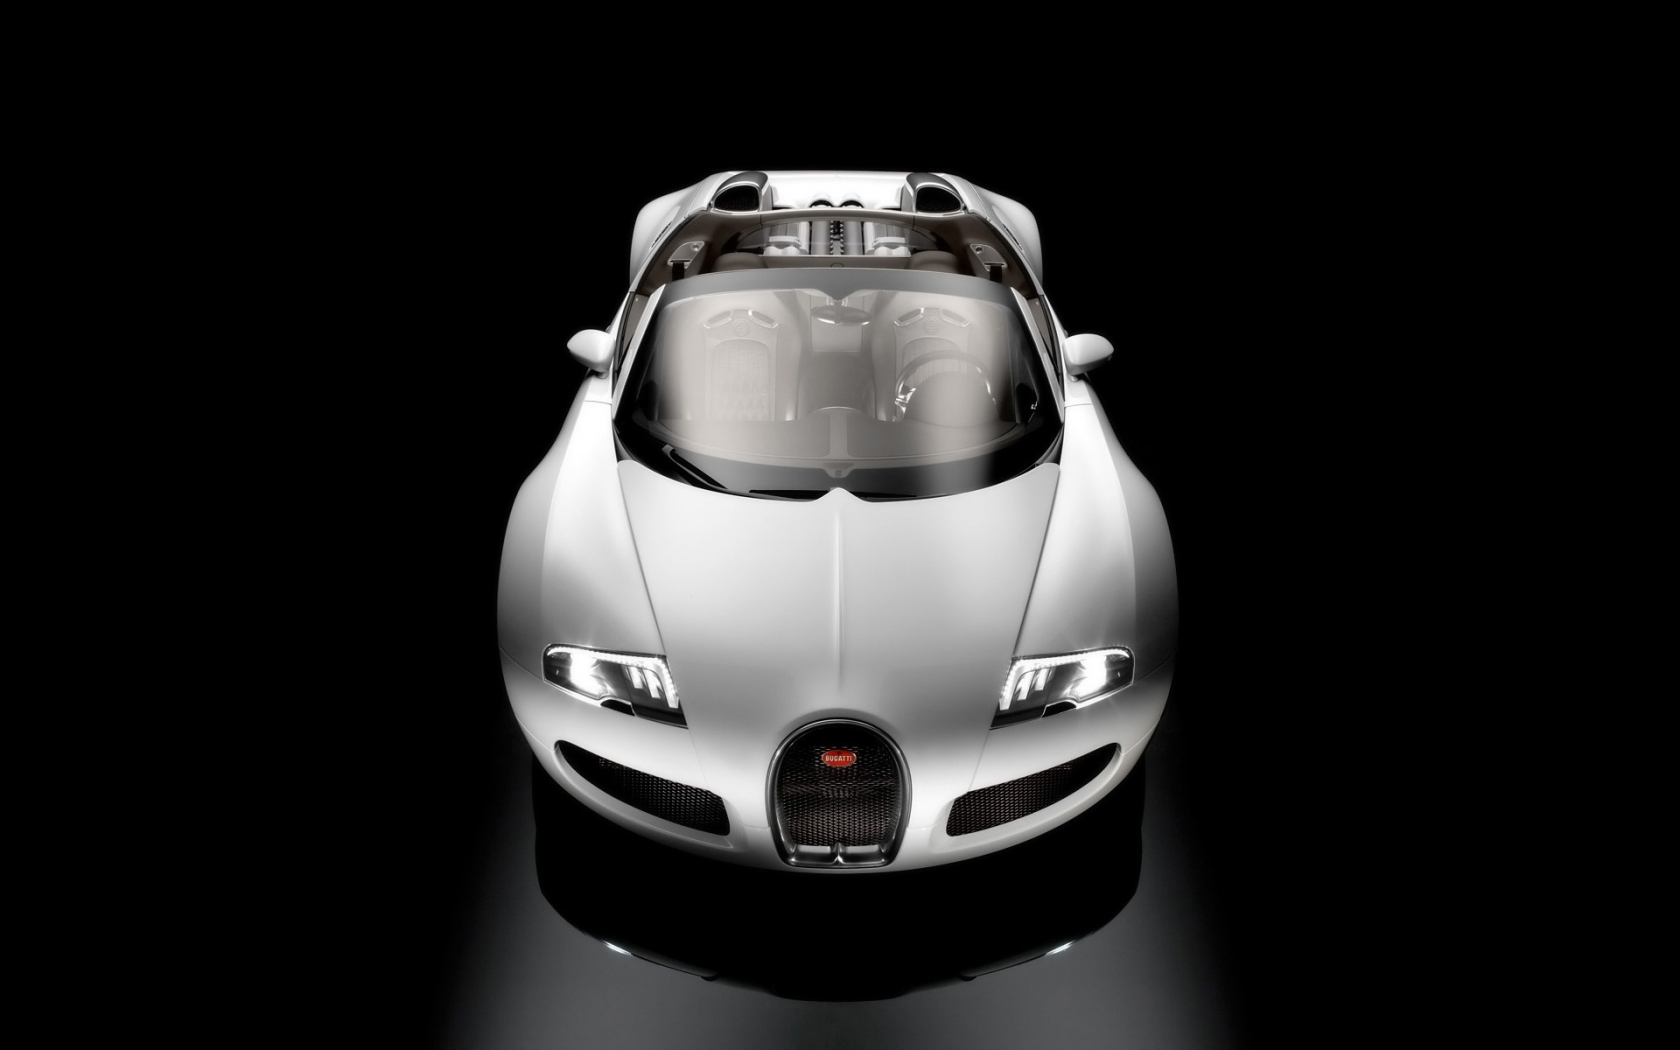 Bugatti Veyron 16.4 Grand Sport Production Version 2009 - Studio Front Top for 1680 x 1050 widescreen resolution